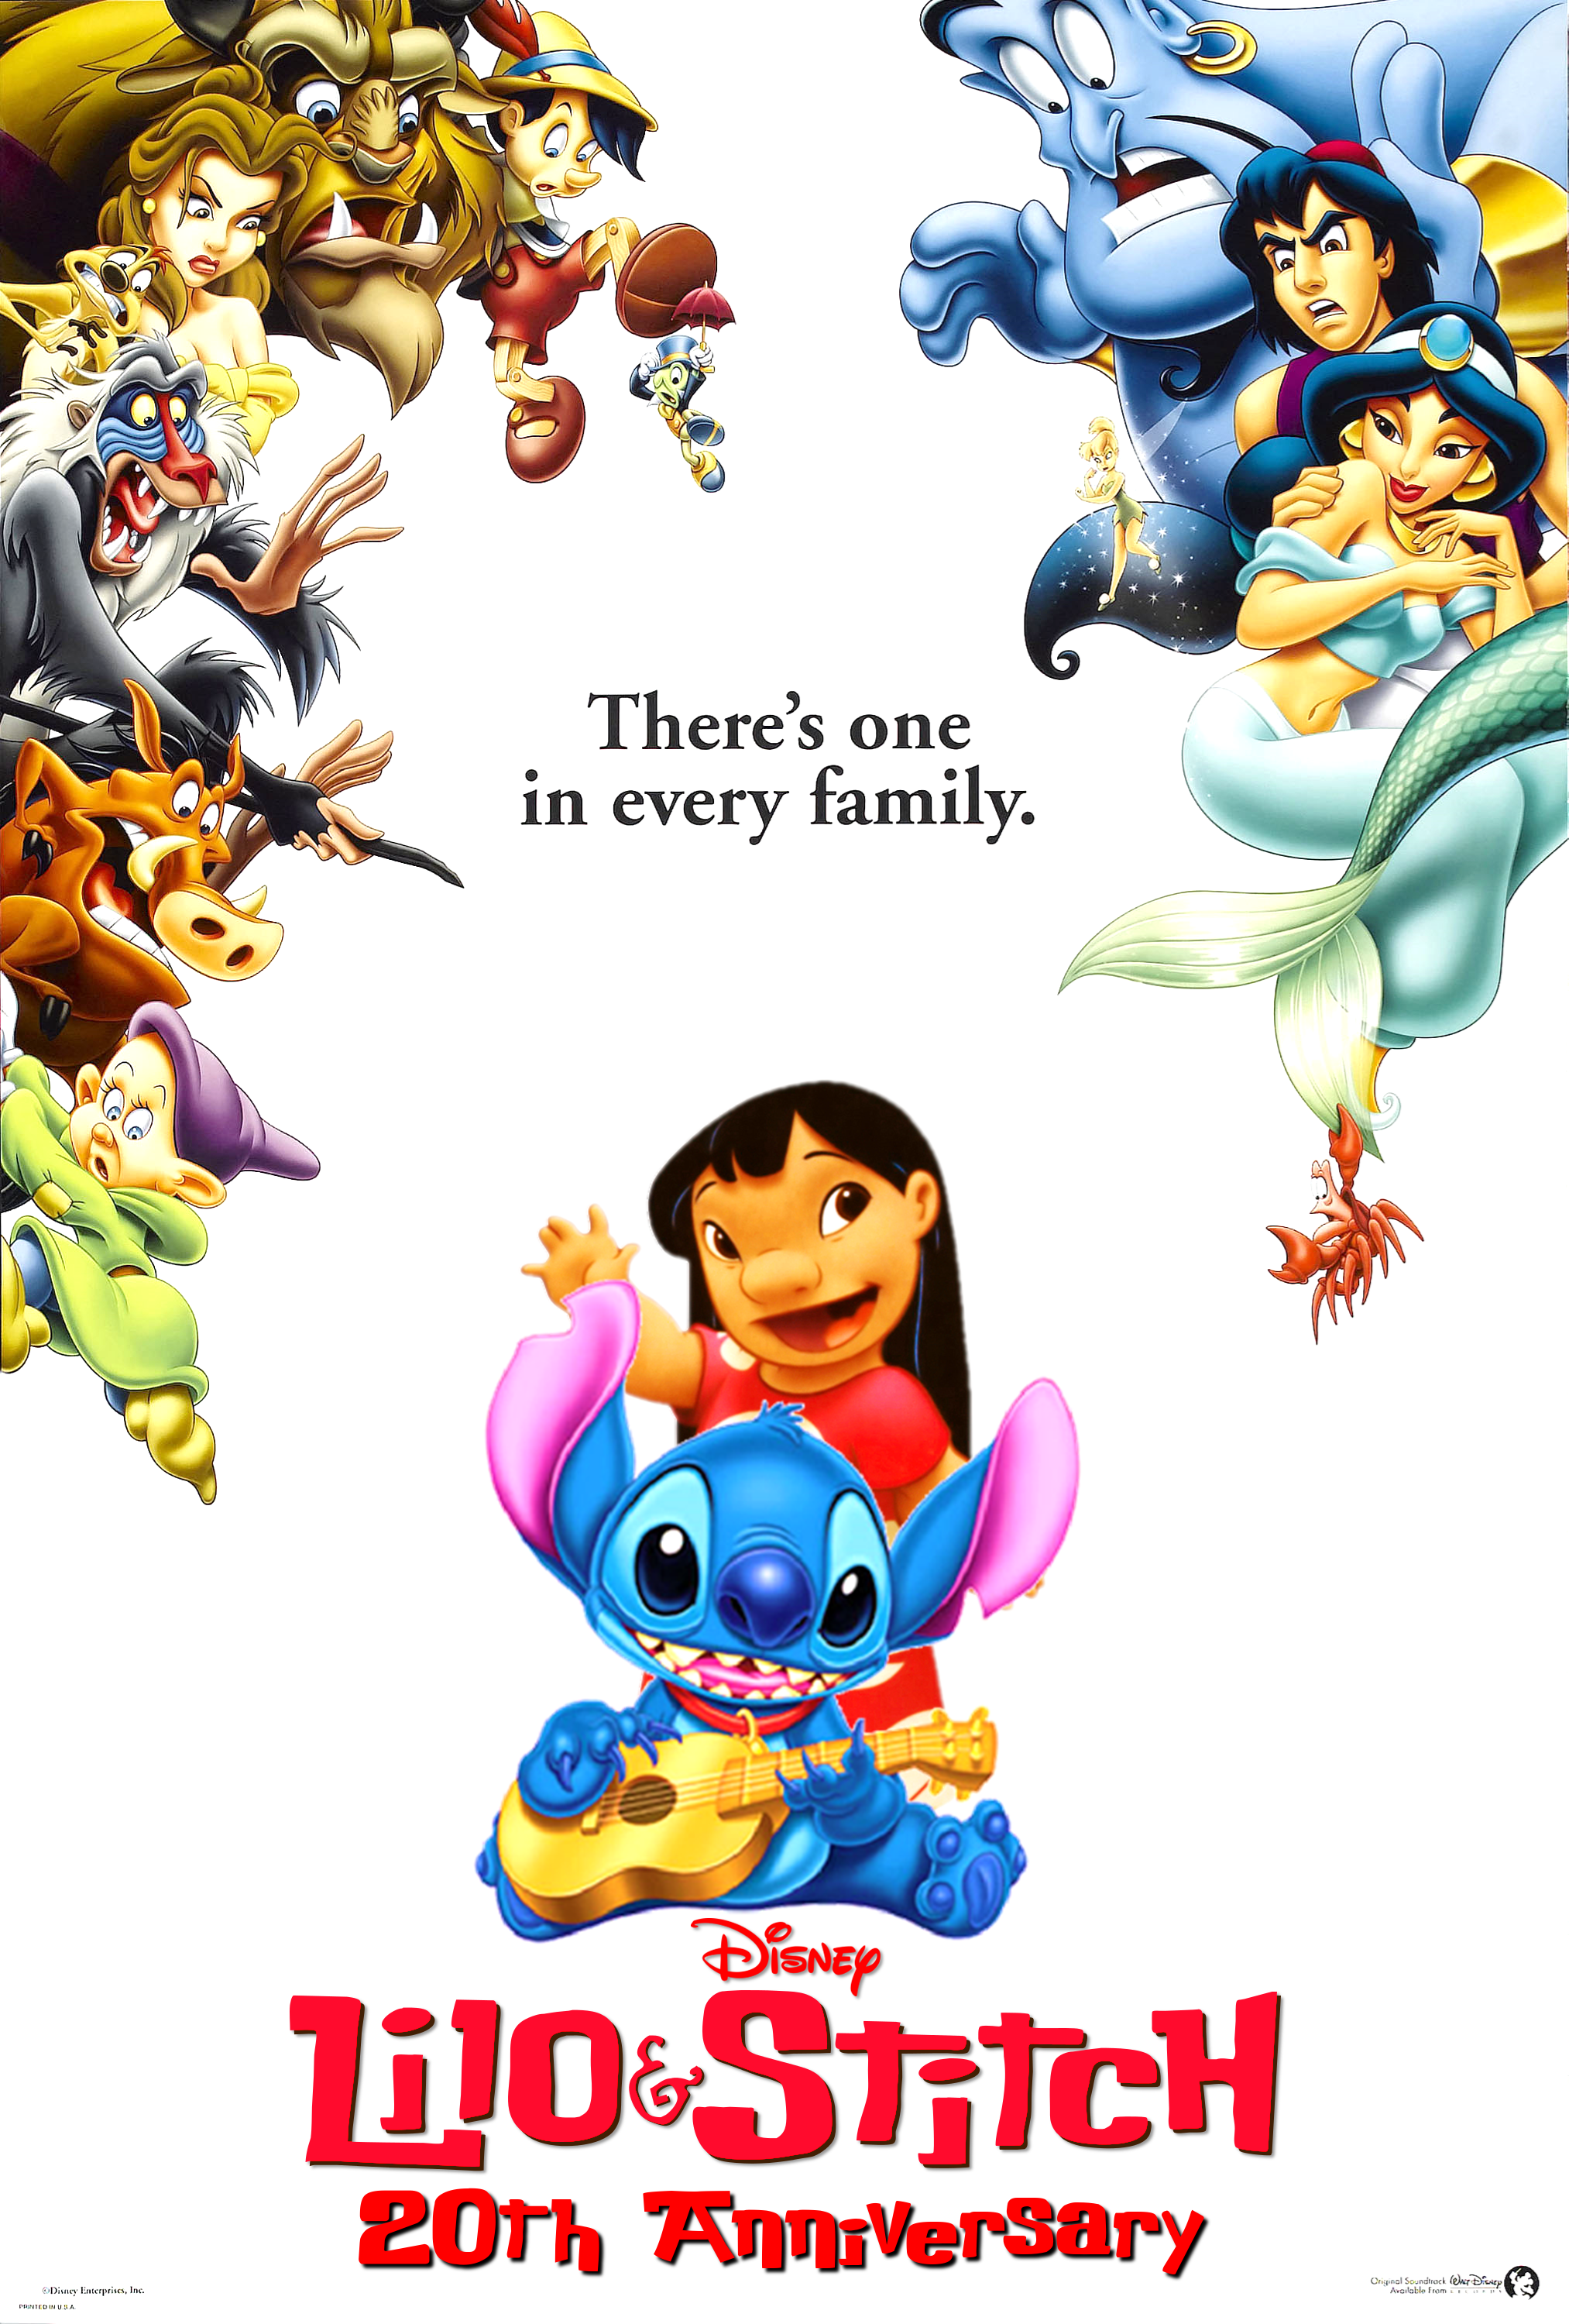 Lilo Stitch 20th Anniversary by Disneydude94 on DeviantArt